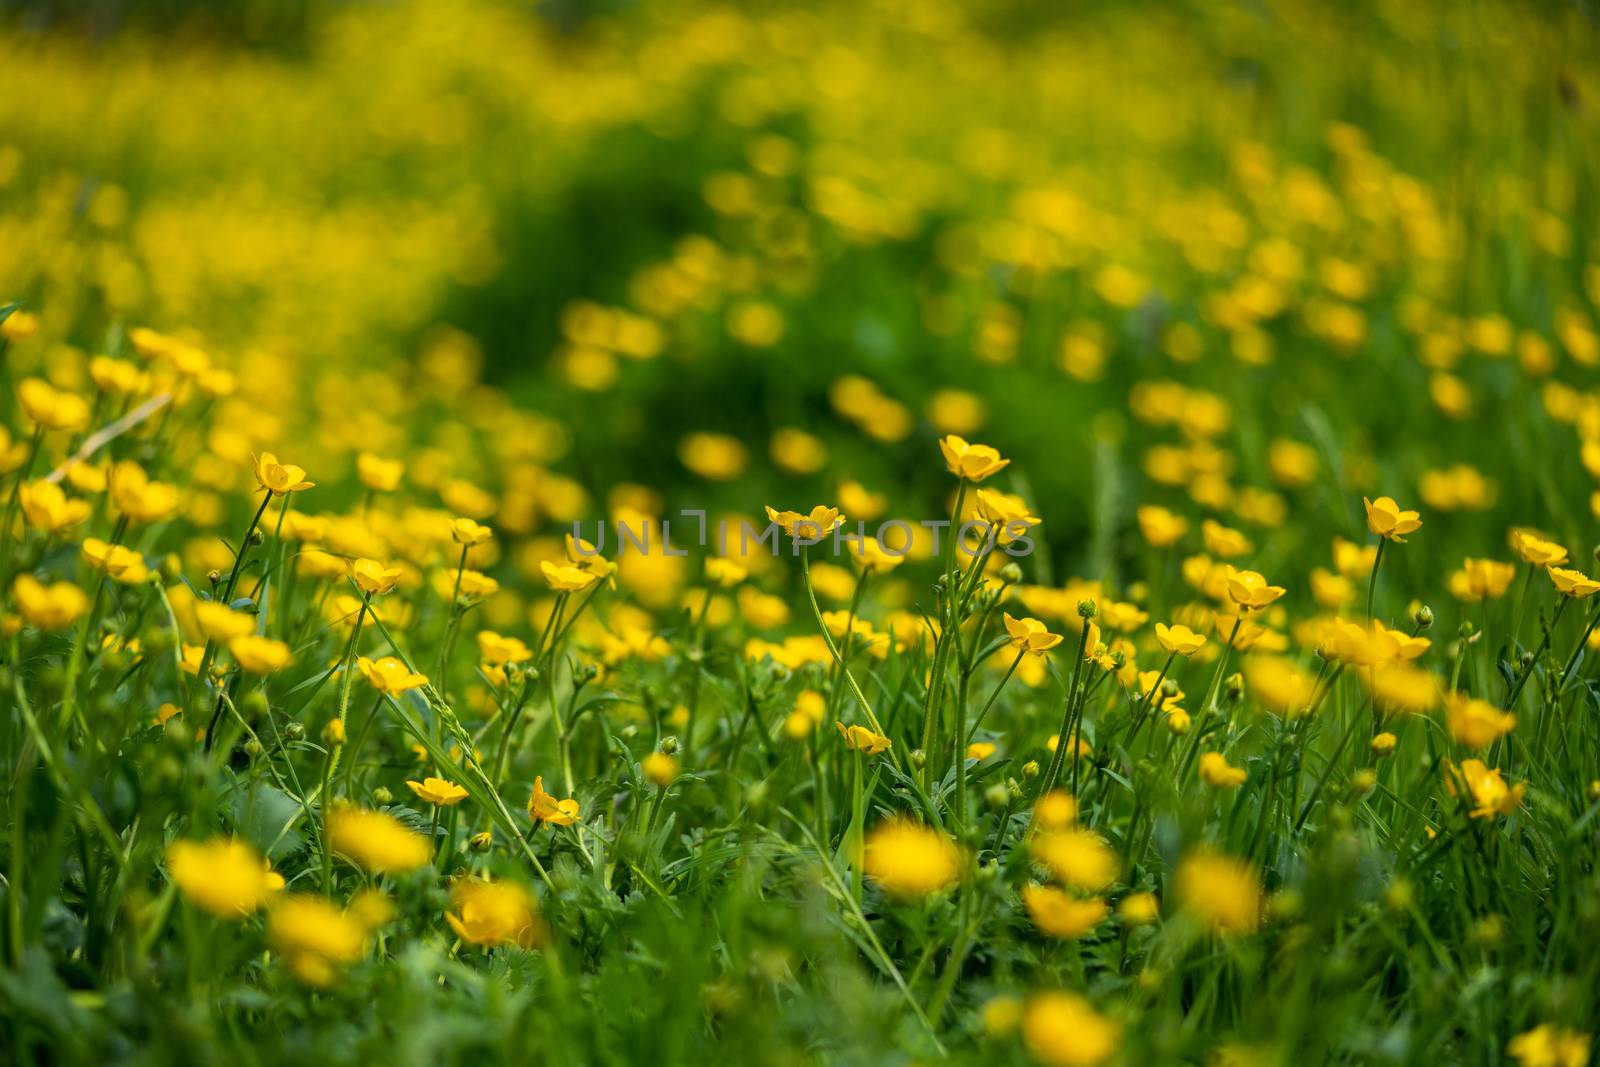 Yellow buttercup flowers in a field